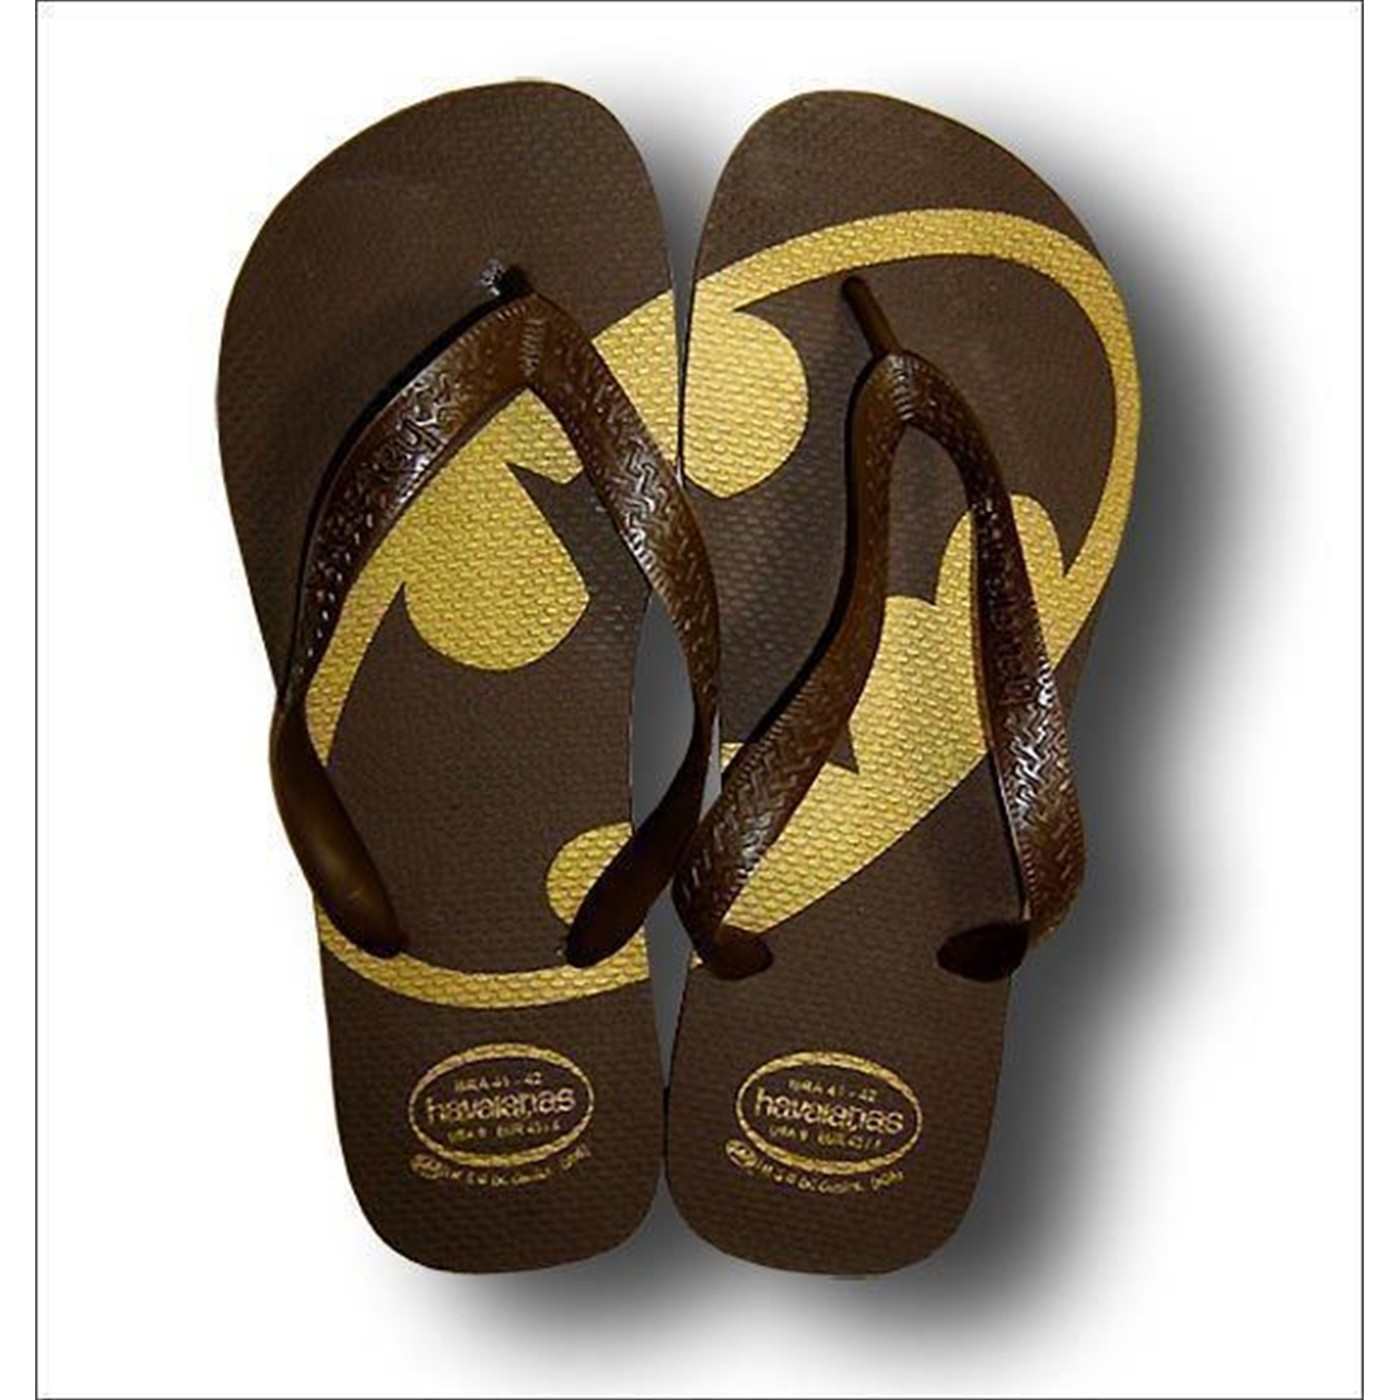 Batman Havaianas Gold and Brown Sandal Flip Flops